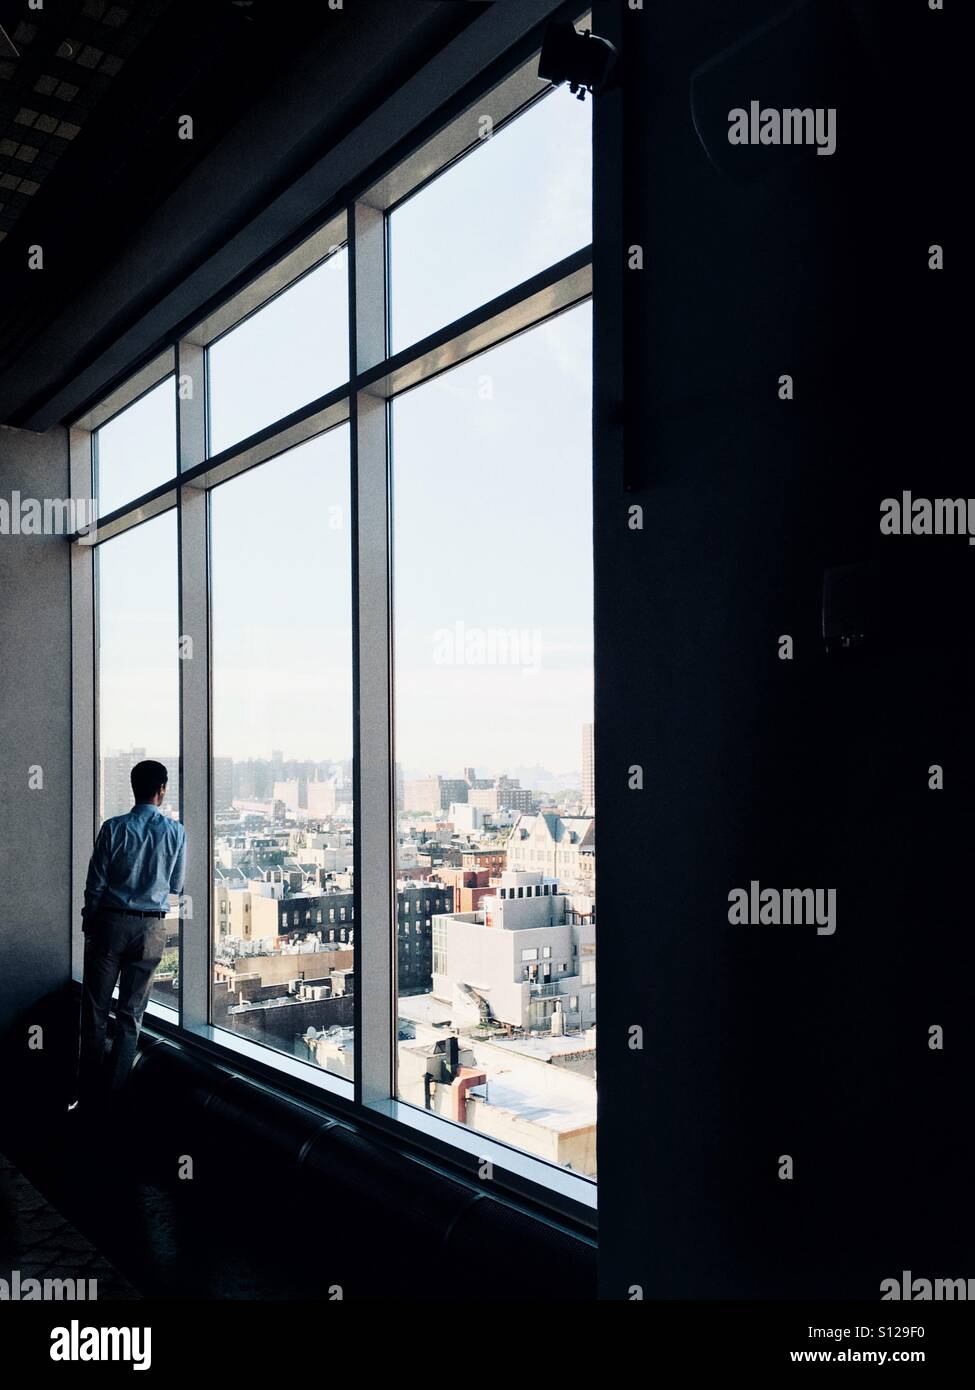 Business Man overlooking New York City Stock Photo